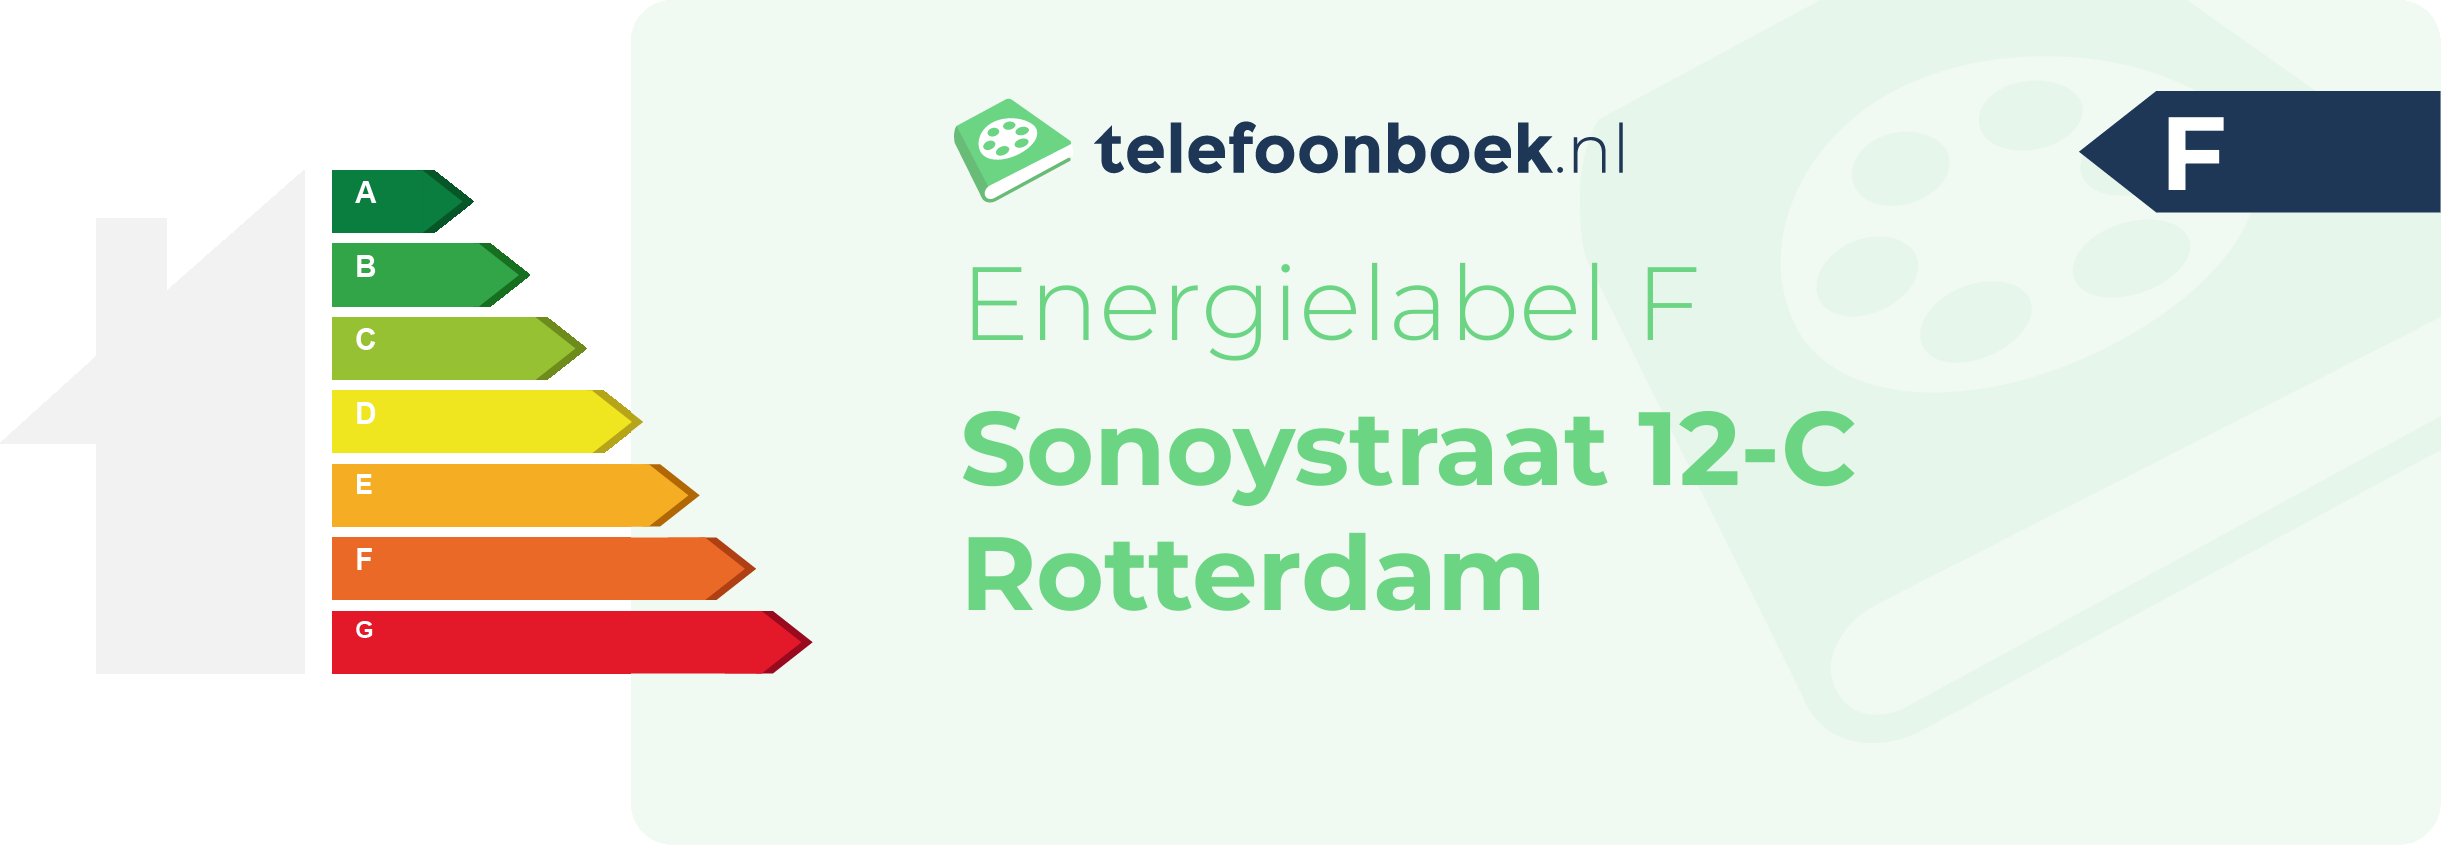 Energielabel Sonoystraat 12-C Rotterdam